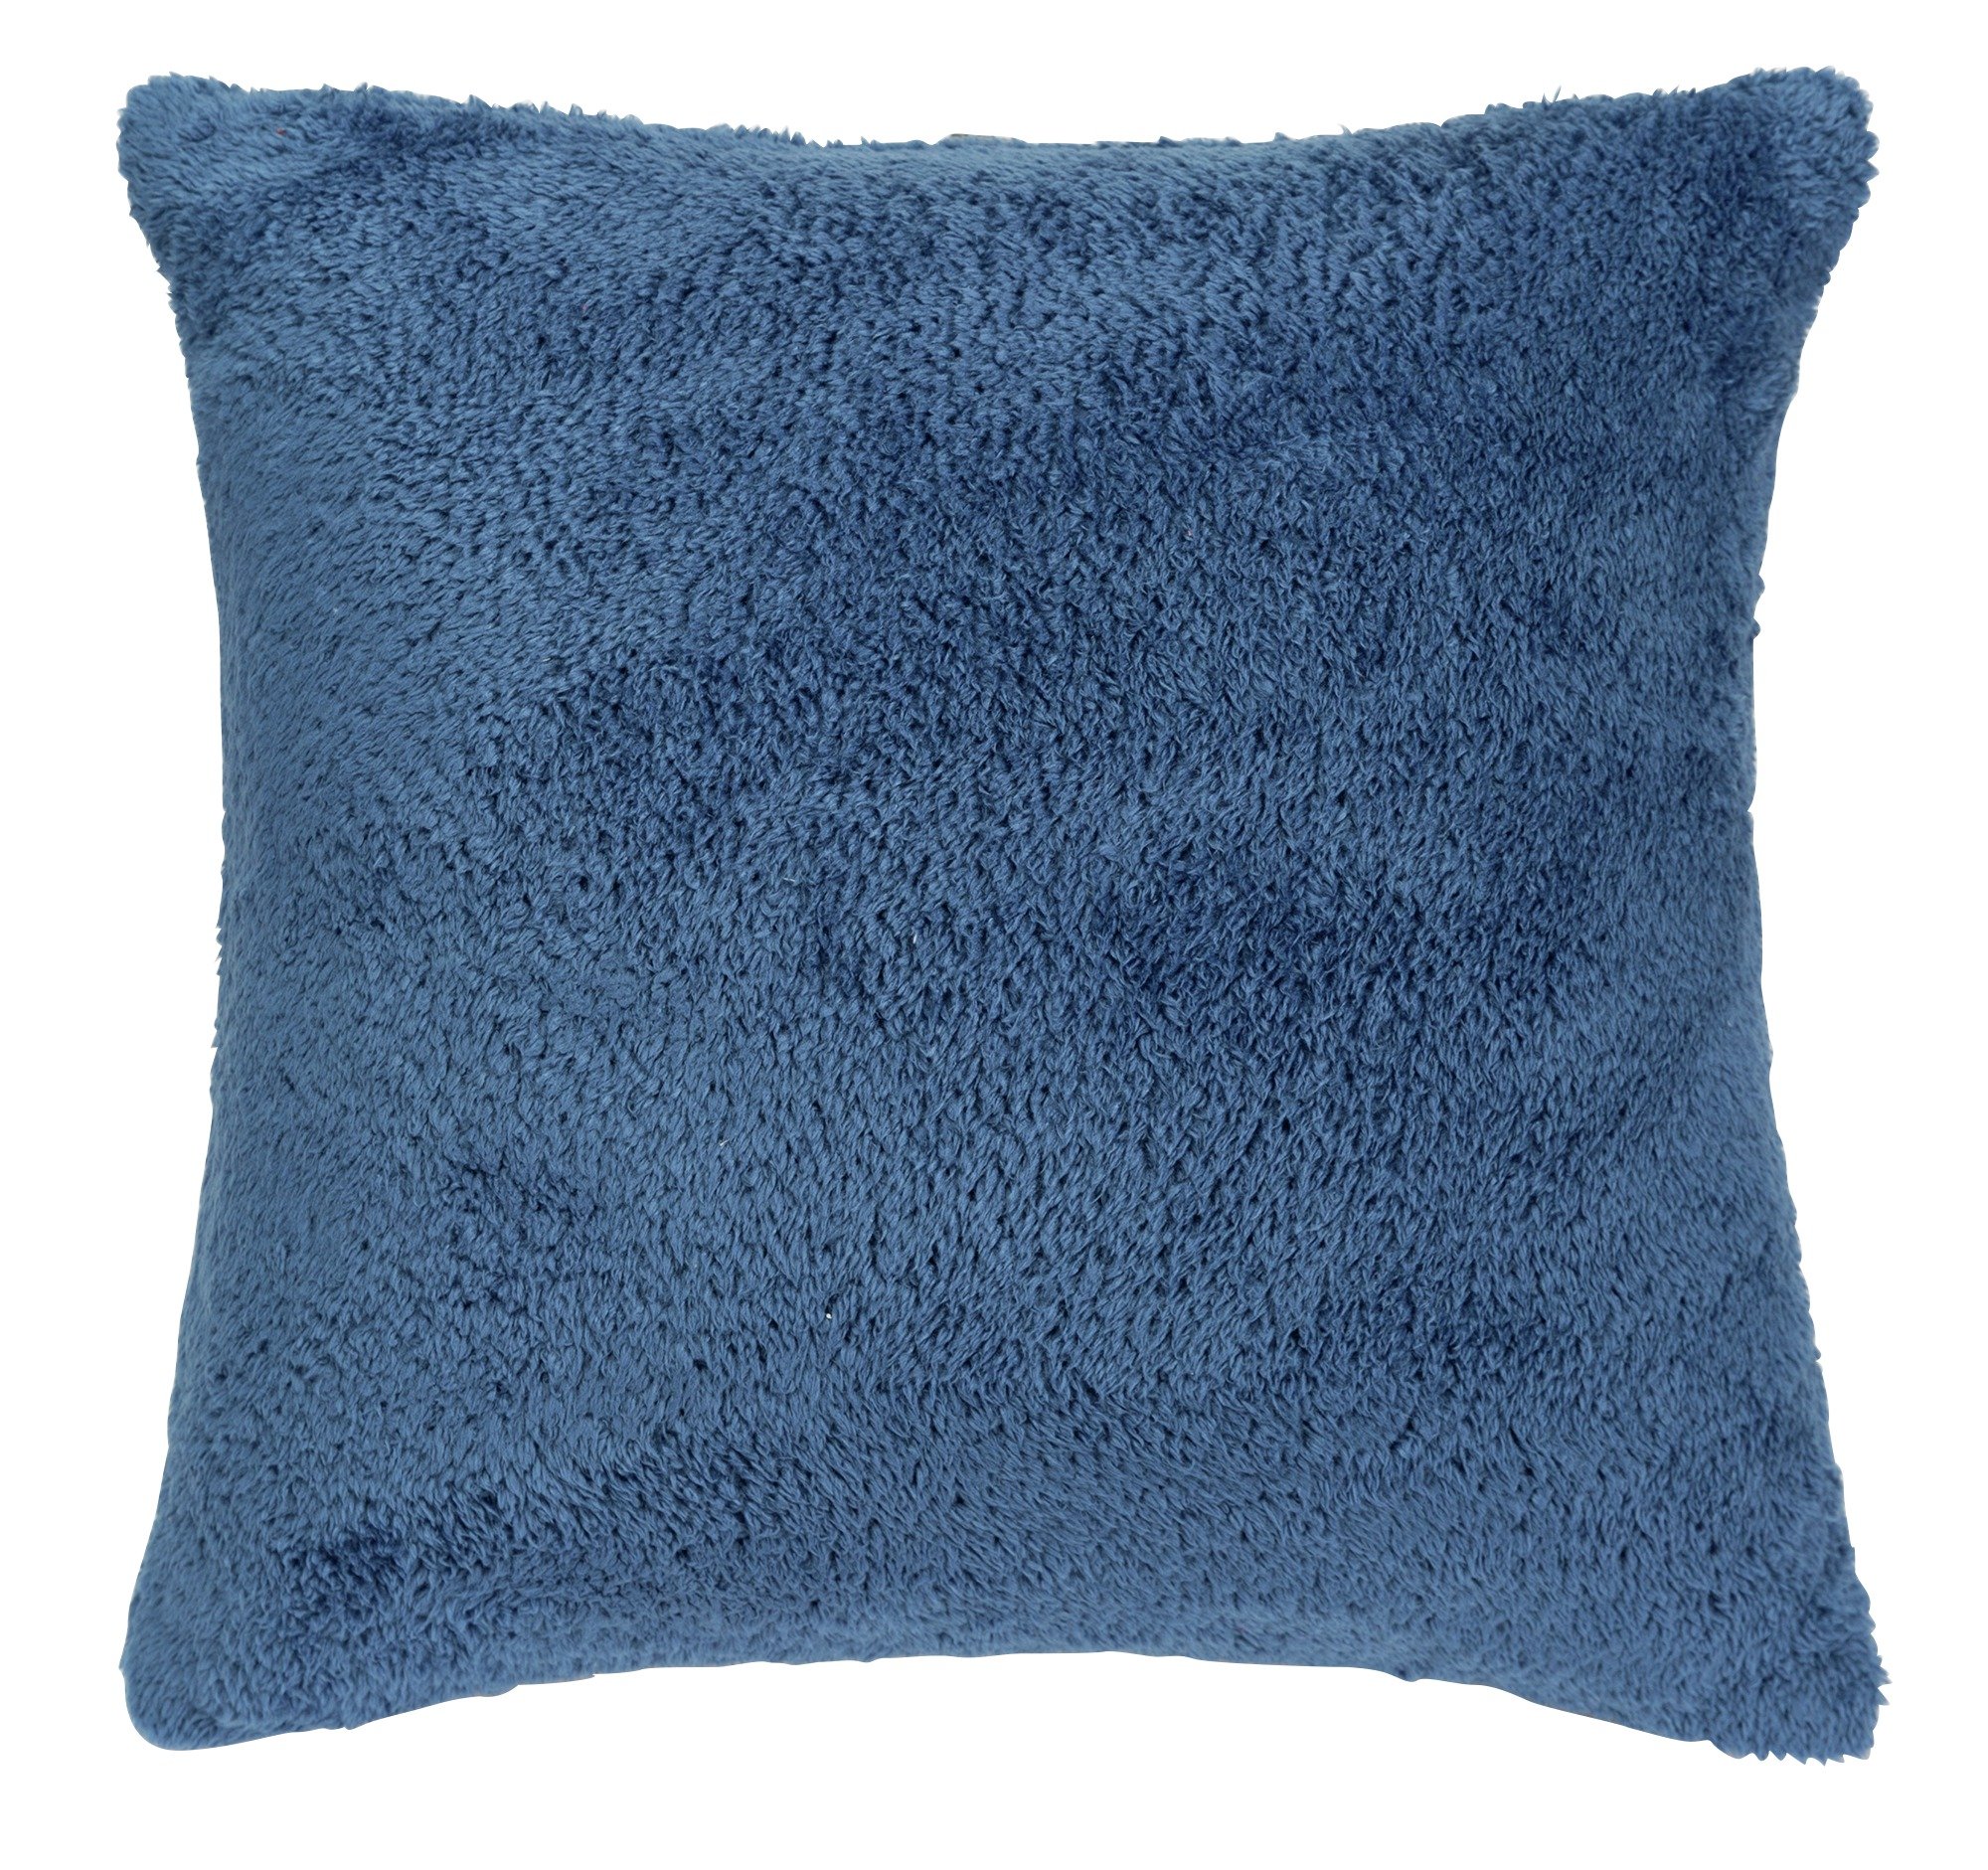 ColourMatch Supersoft Cushion - Ink Blue (6873994) | Argos Price ...